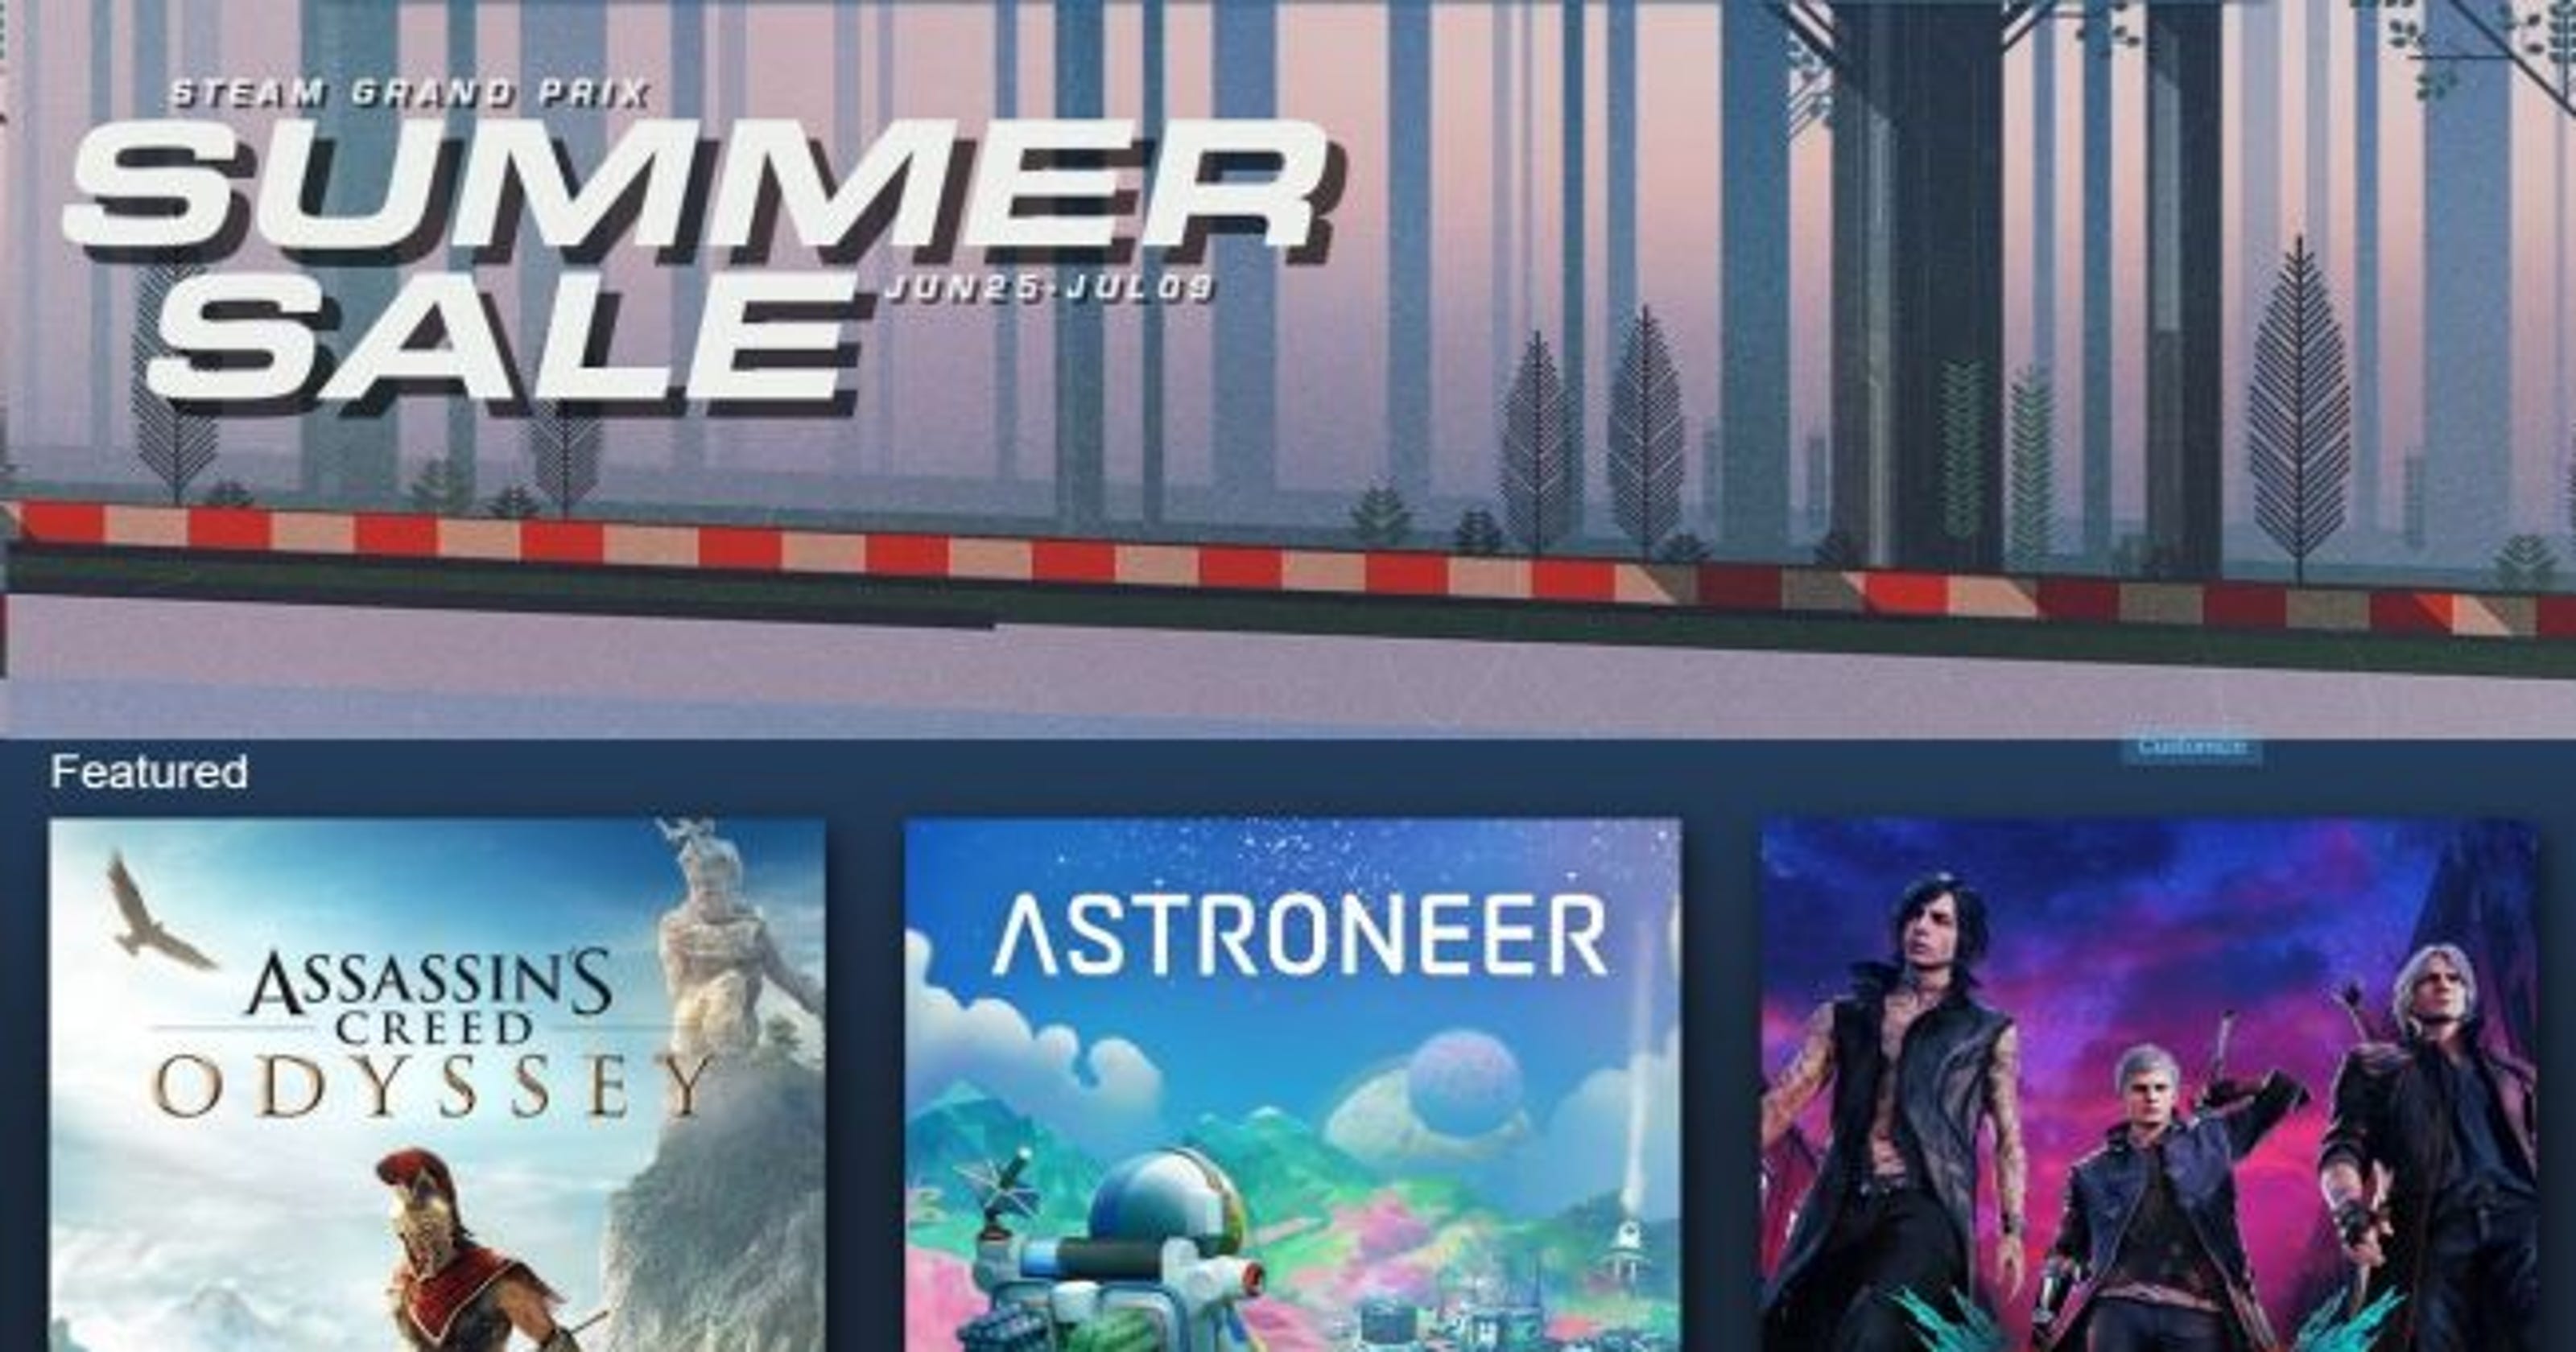 Steam's summer sale on video games runs through July 9